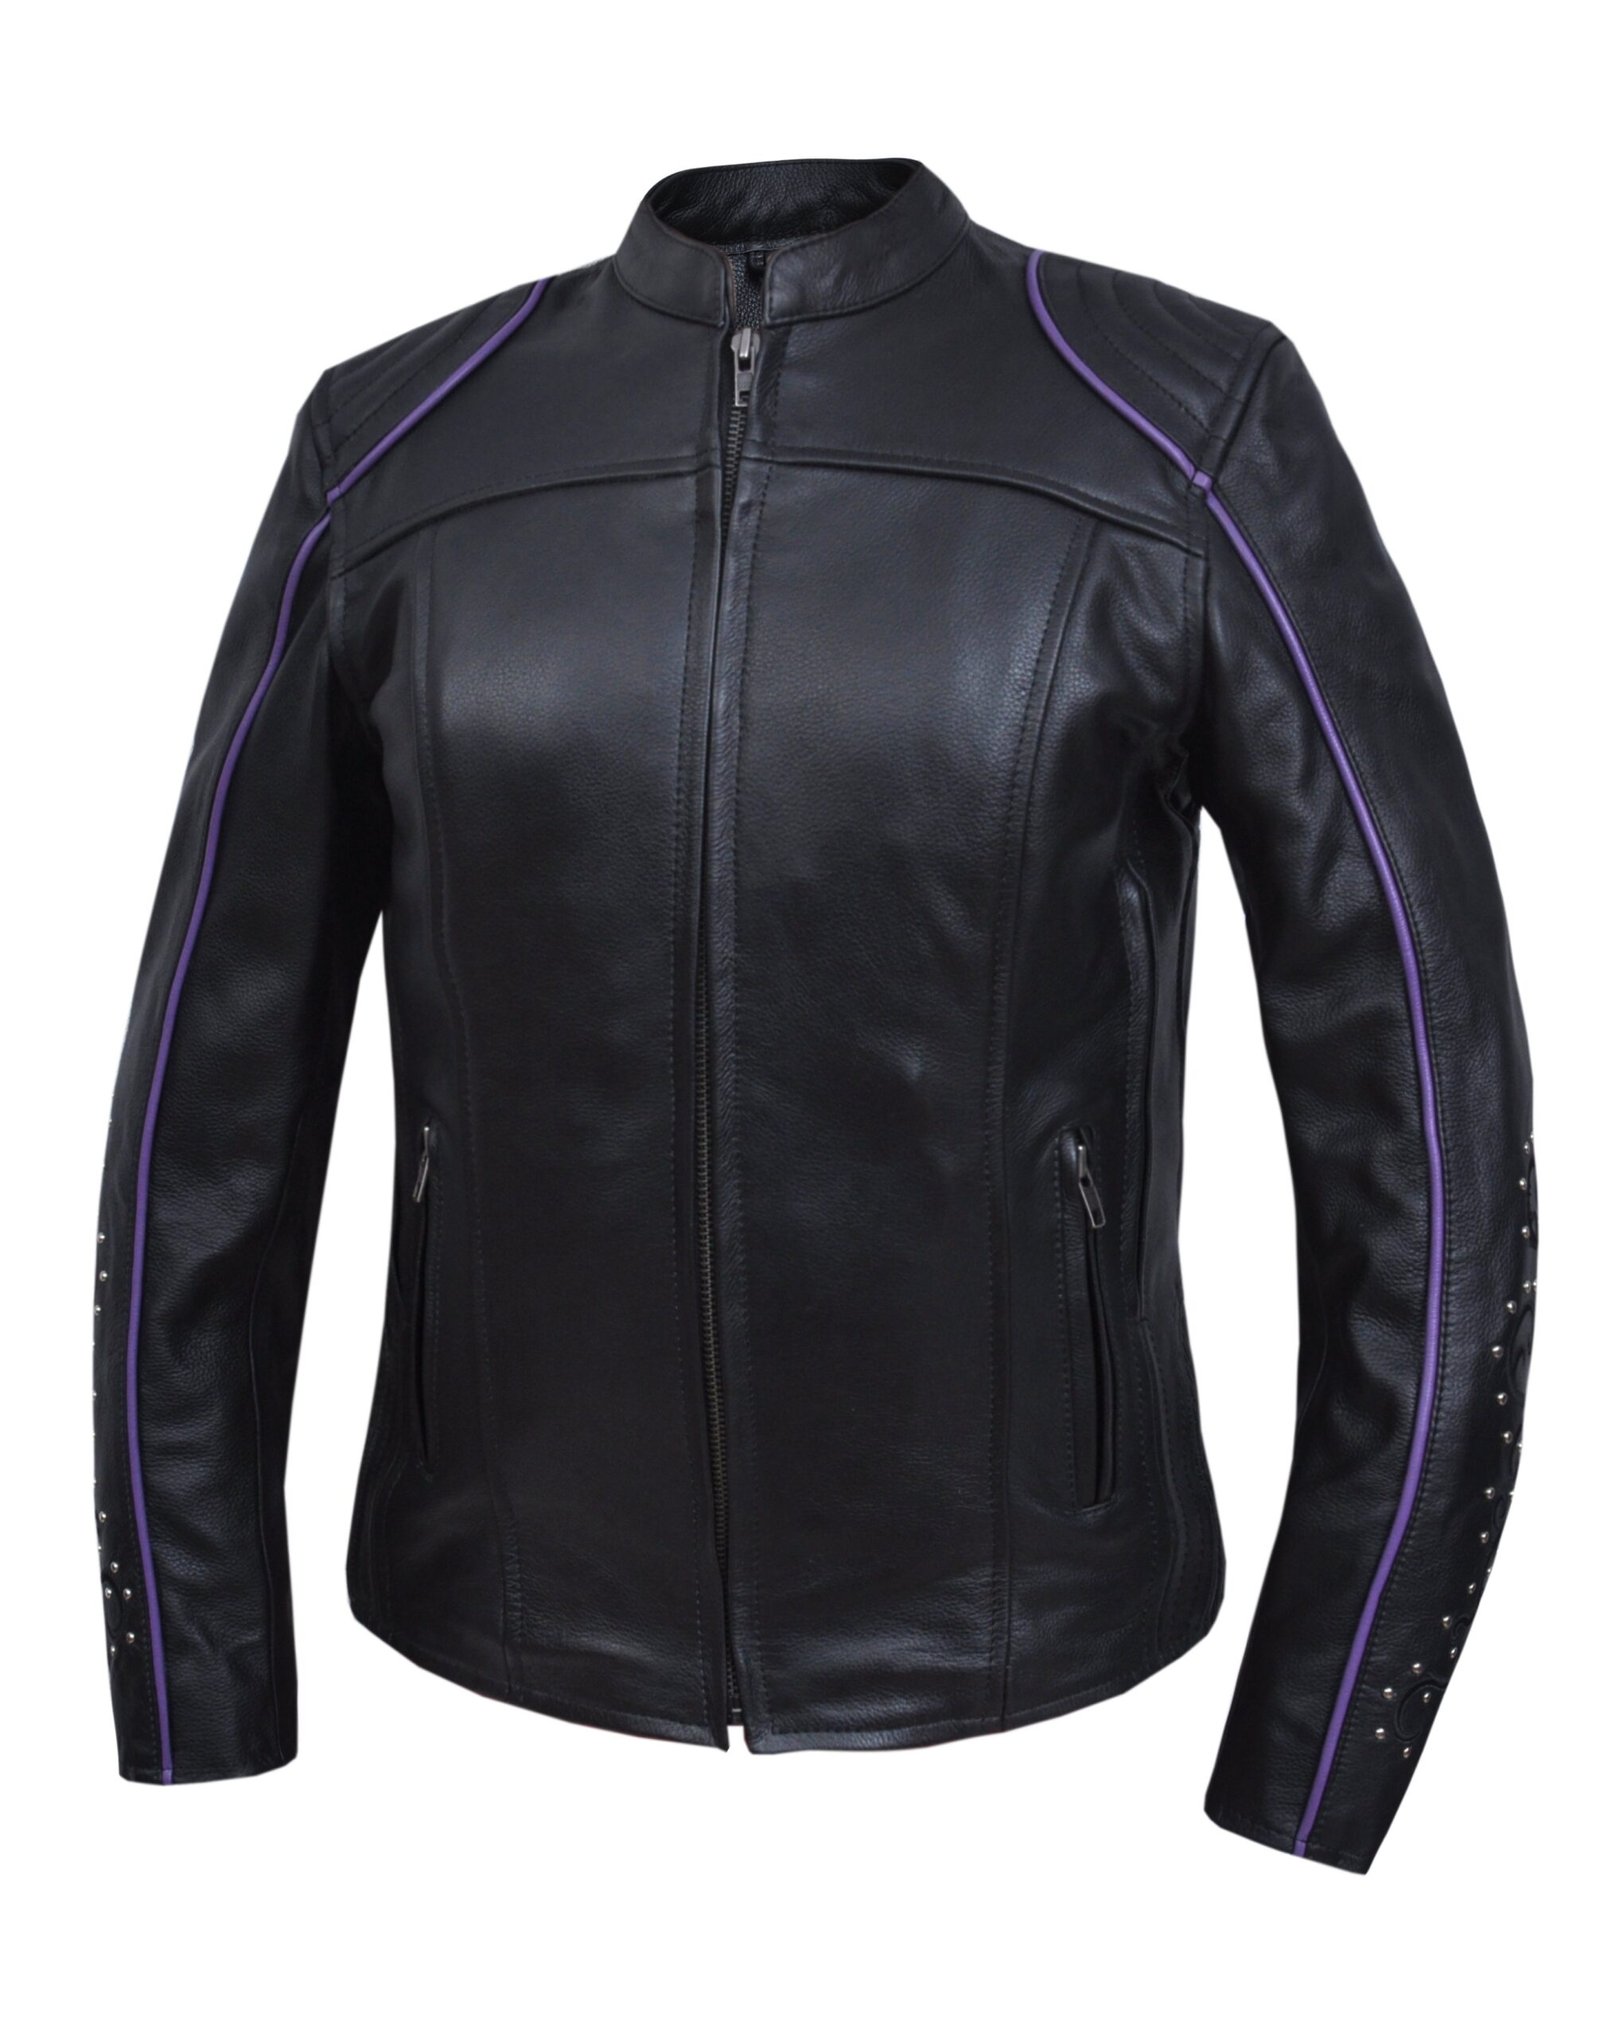 UNIK Ladies Racer Style Leather Motorcycle Jacket With Purple Wings - 6824-17-UN